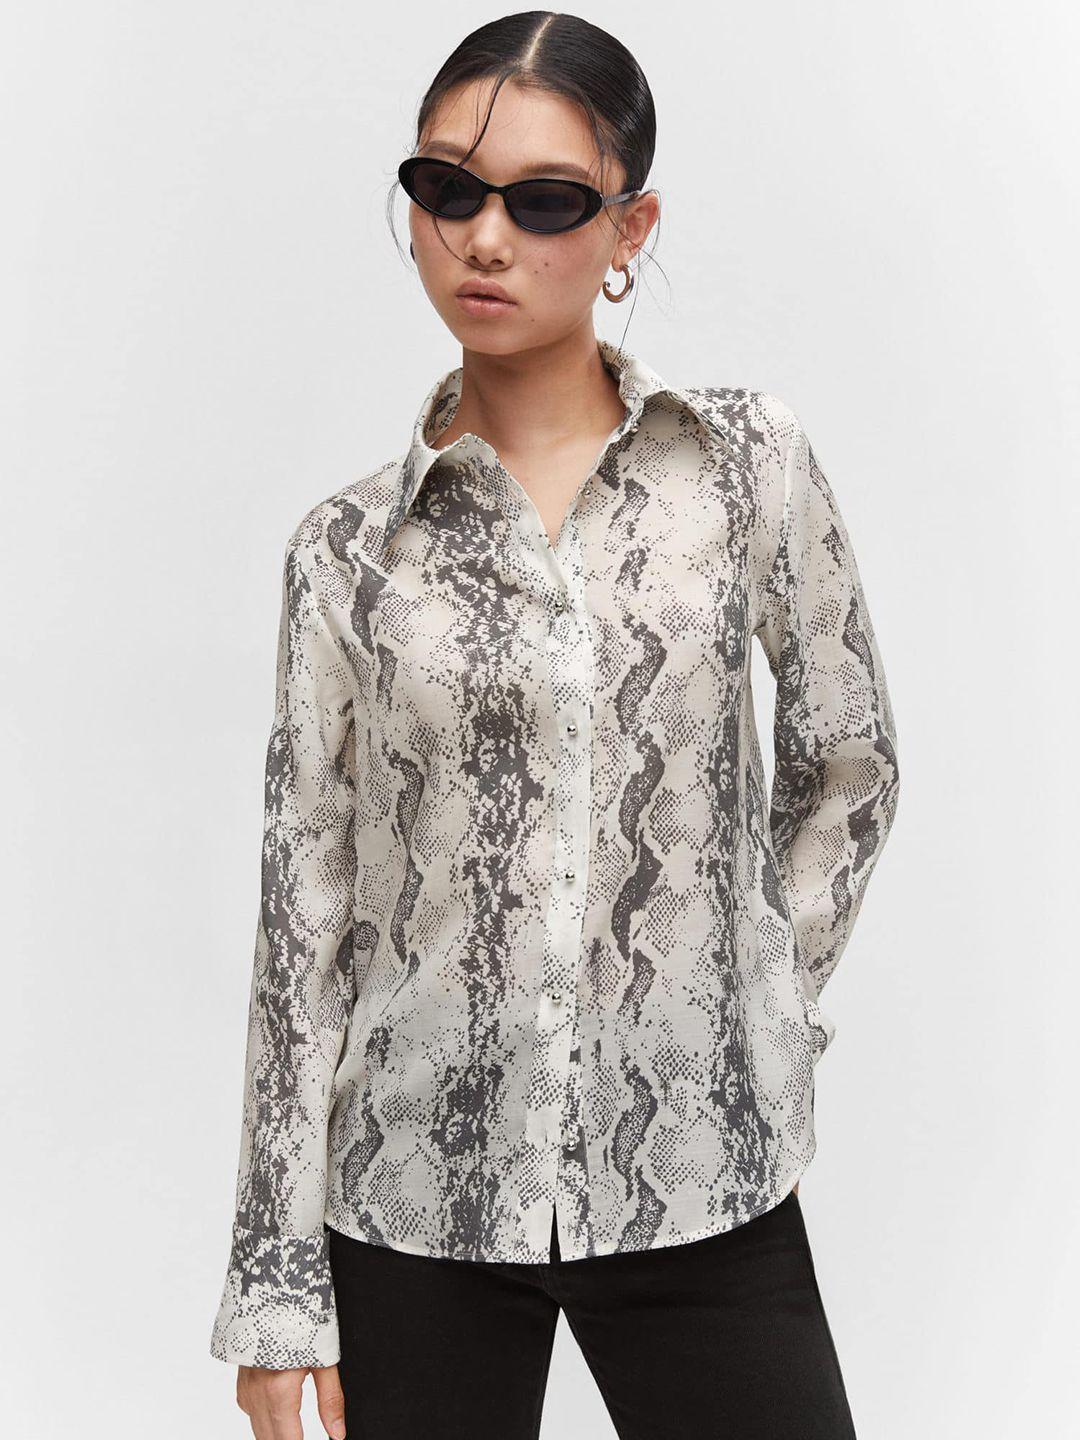 mango snake skin printed casual shirt